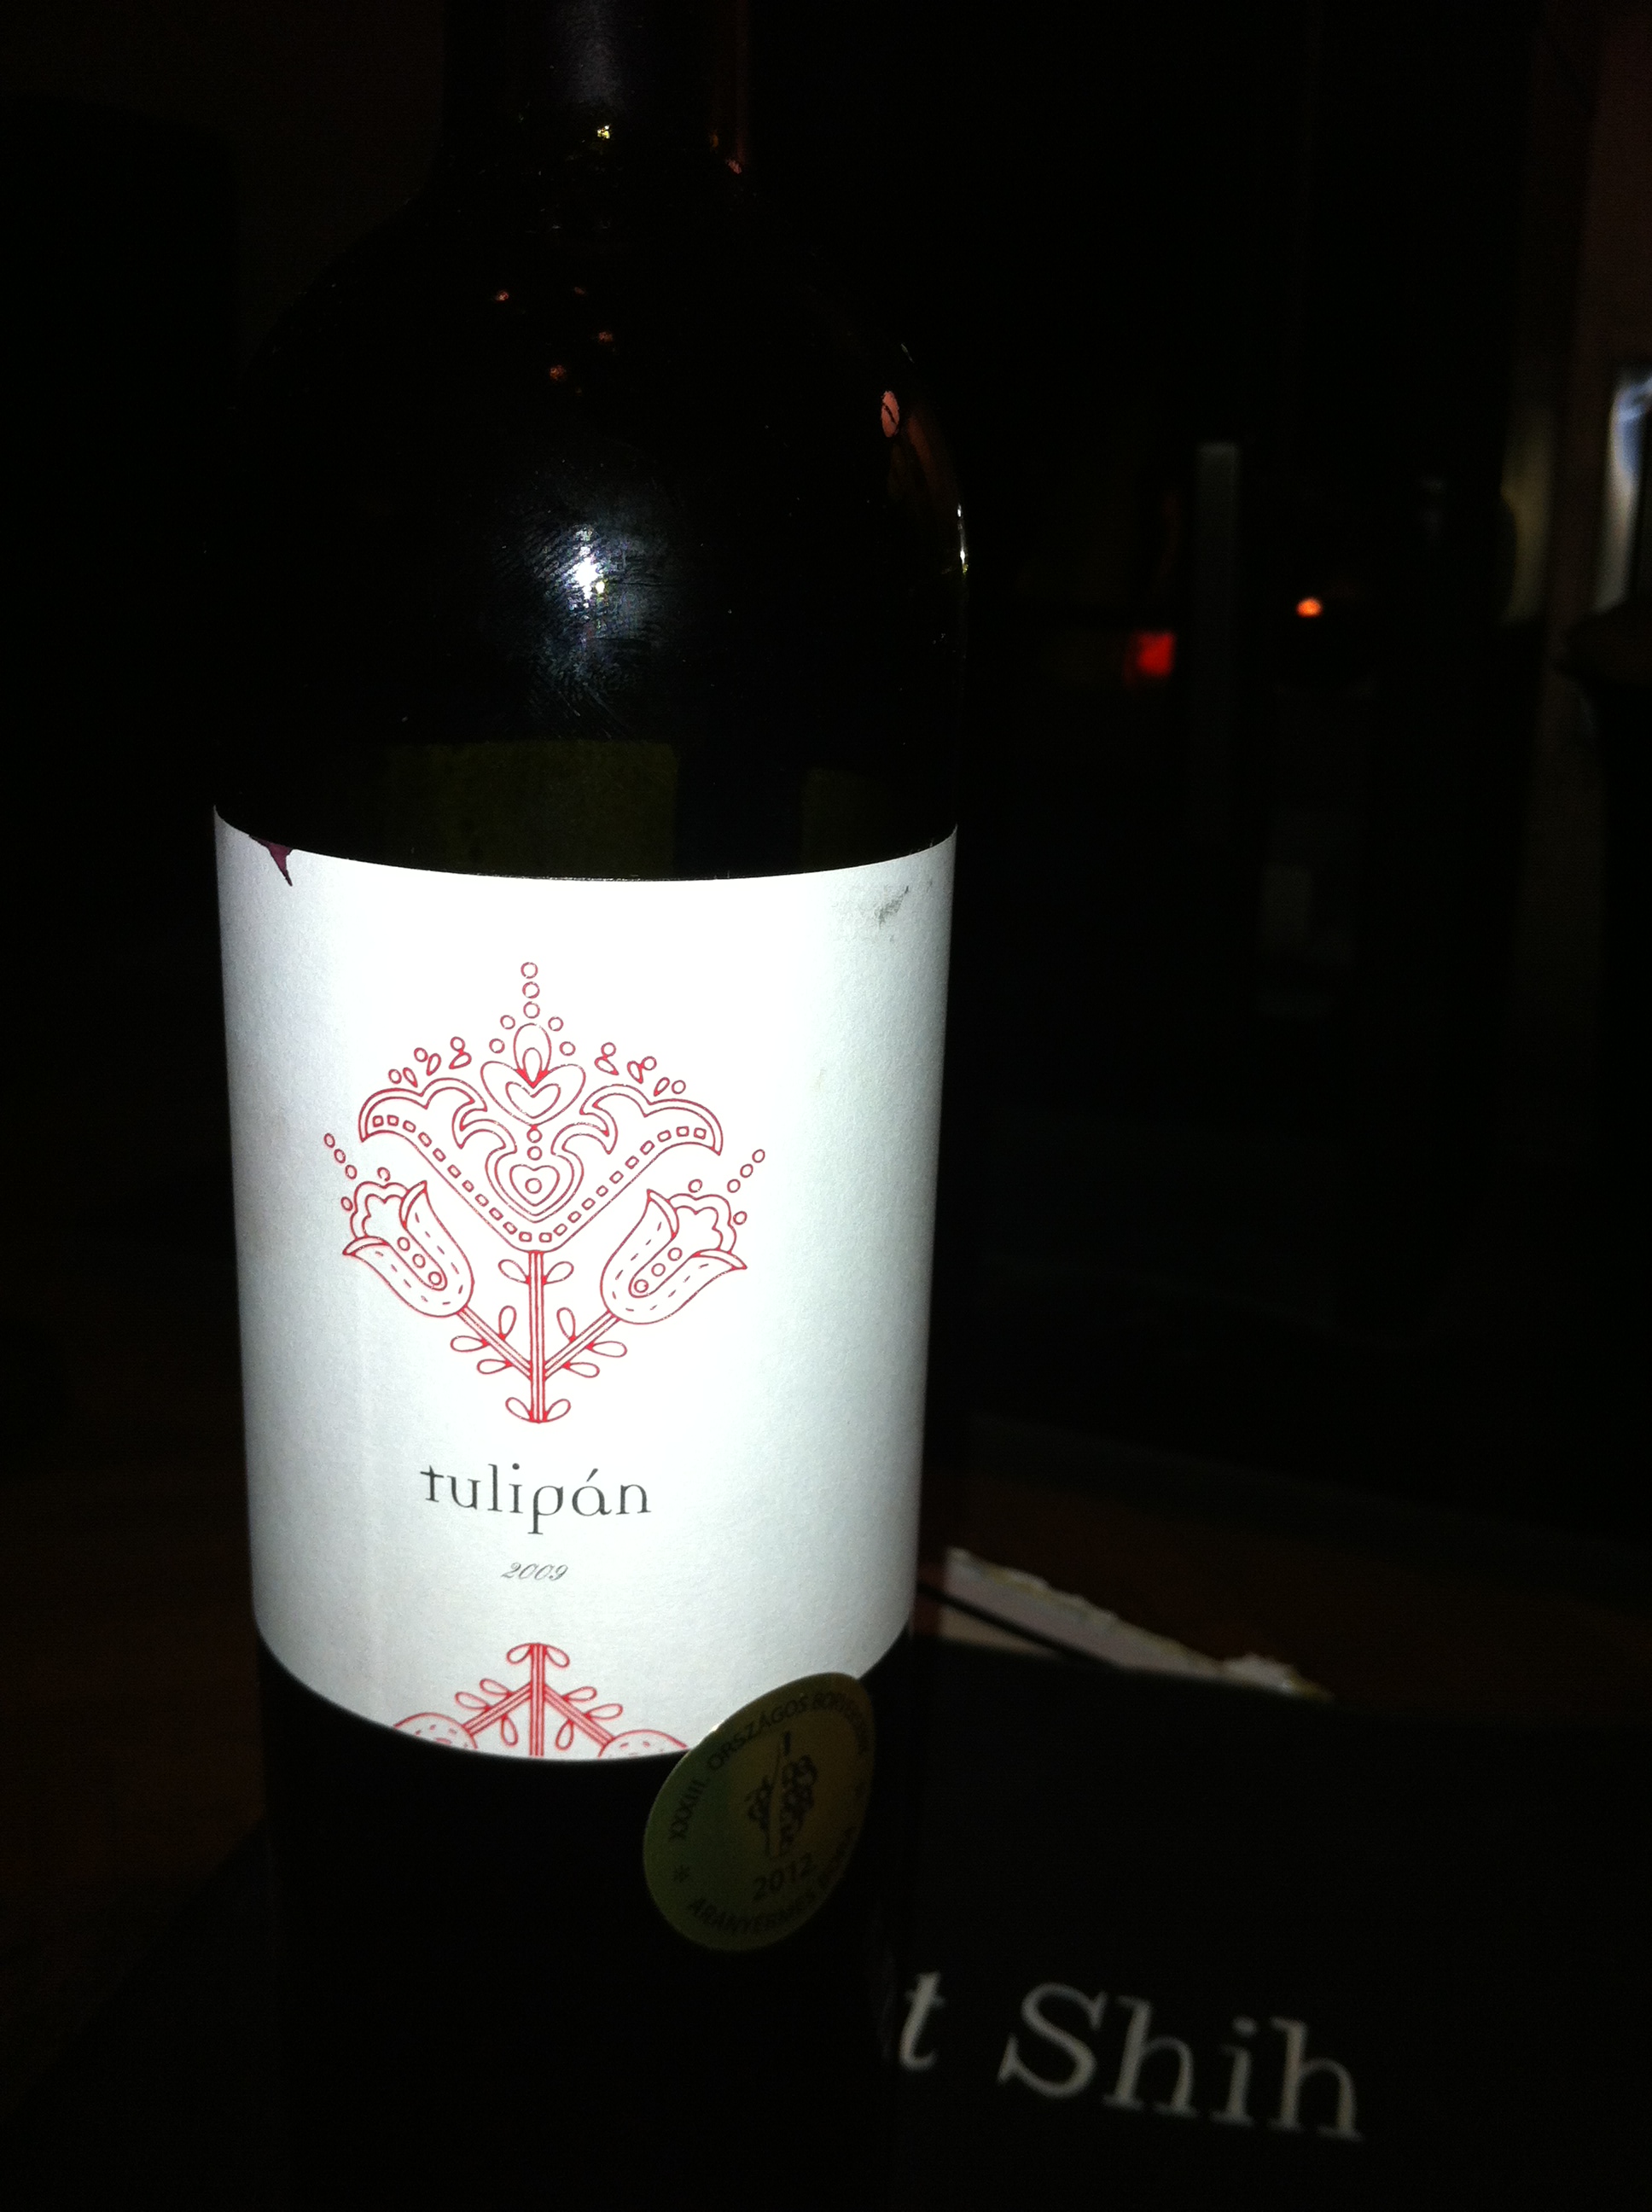 Tulipán 2009, Ikon Winery